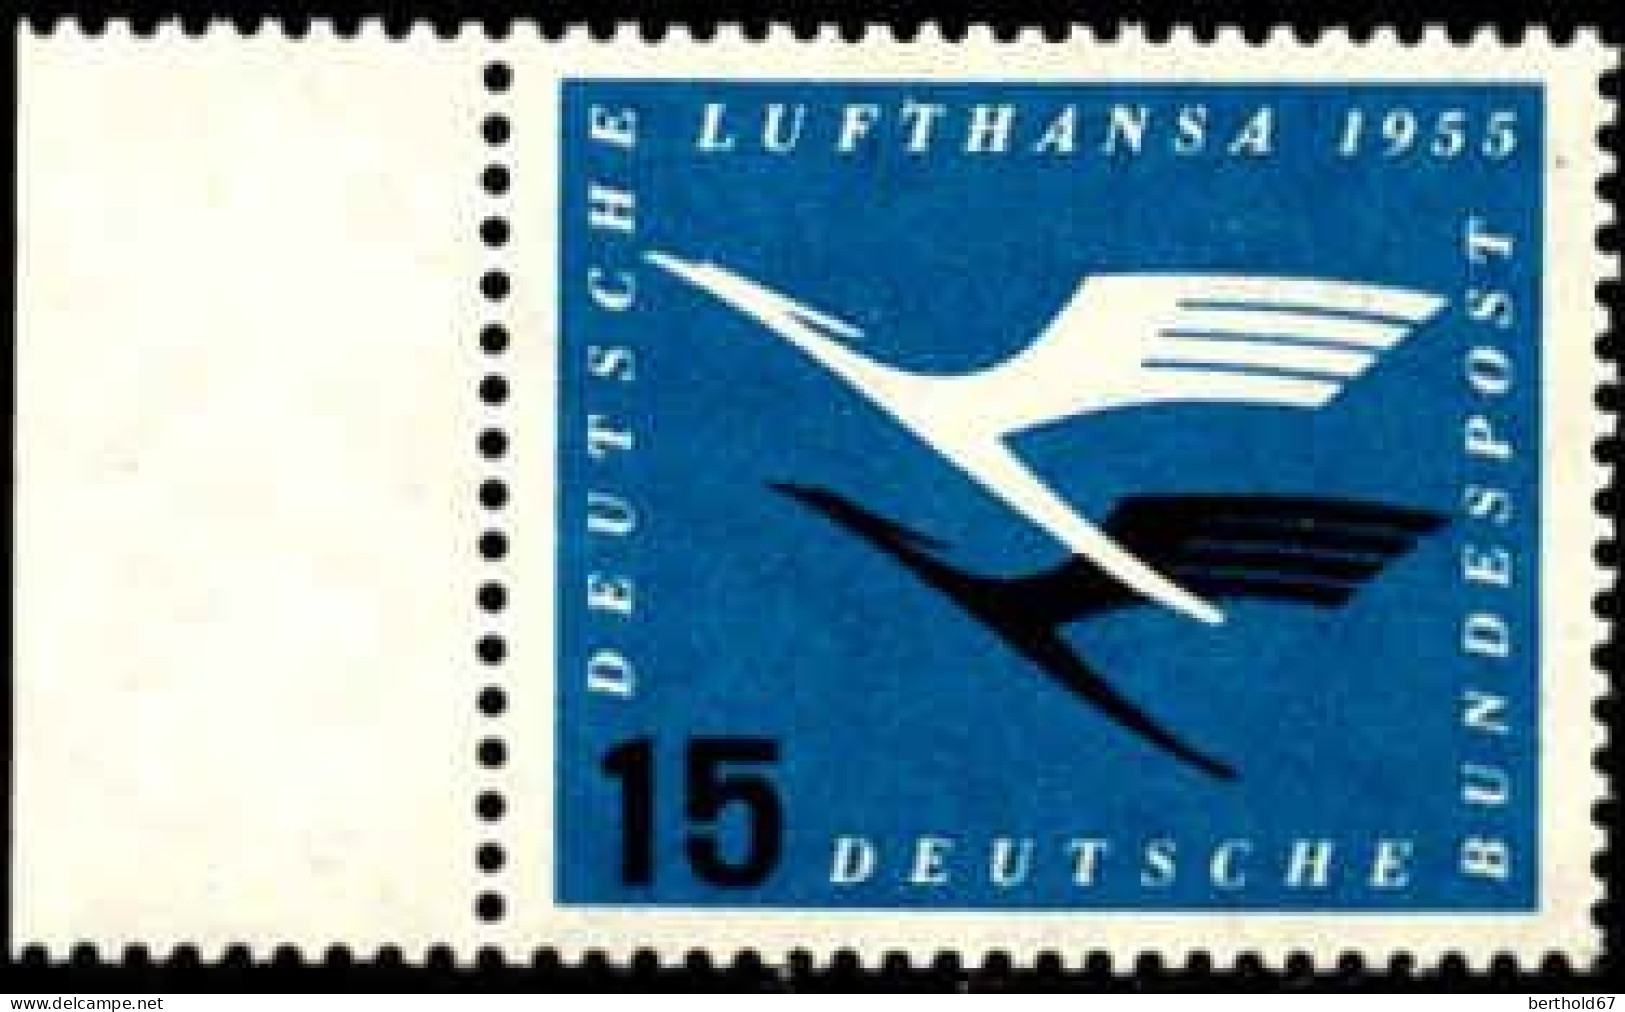 RFA Poste N** Yv:  83 Mi:207 Deutsche Lufthansa Bord De Feuille - Ongebruikt